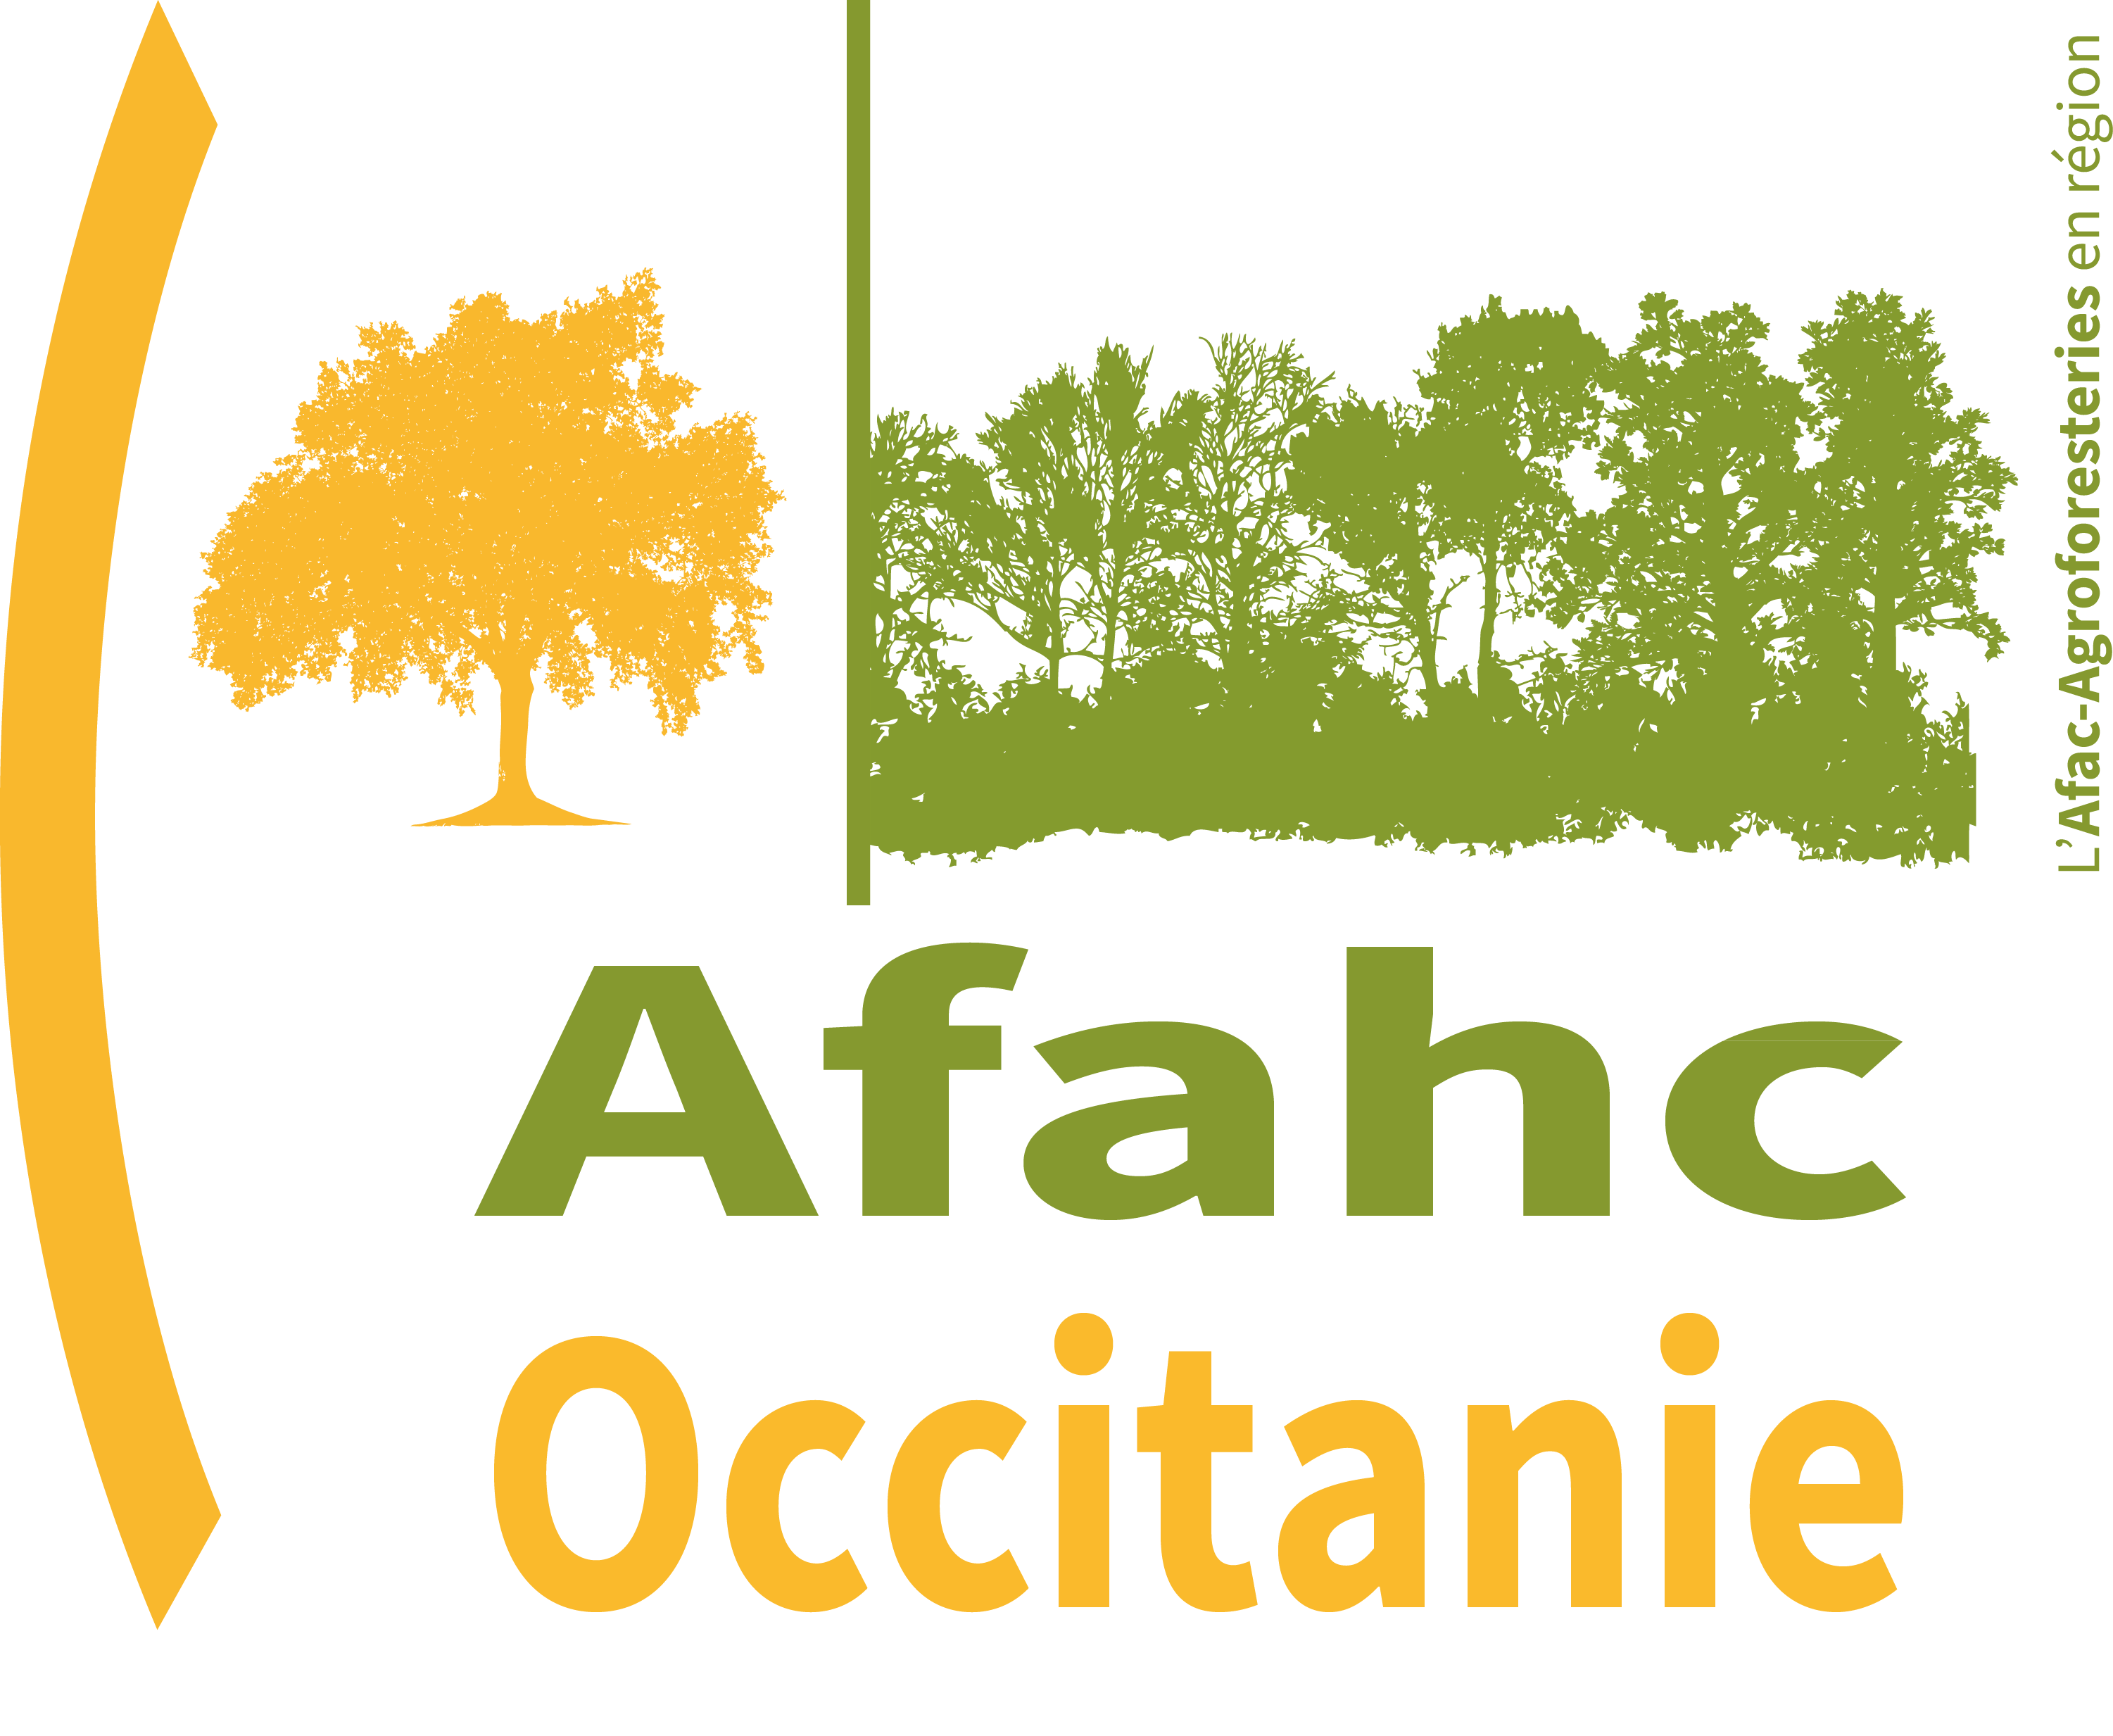 Afahc-Occitanie